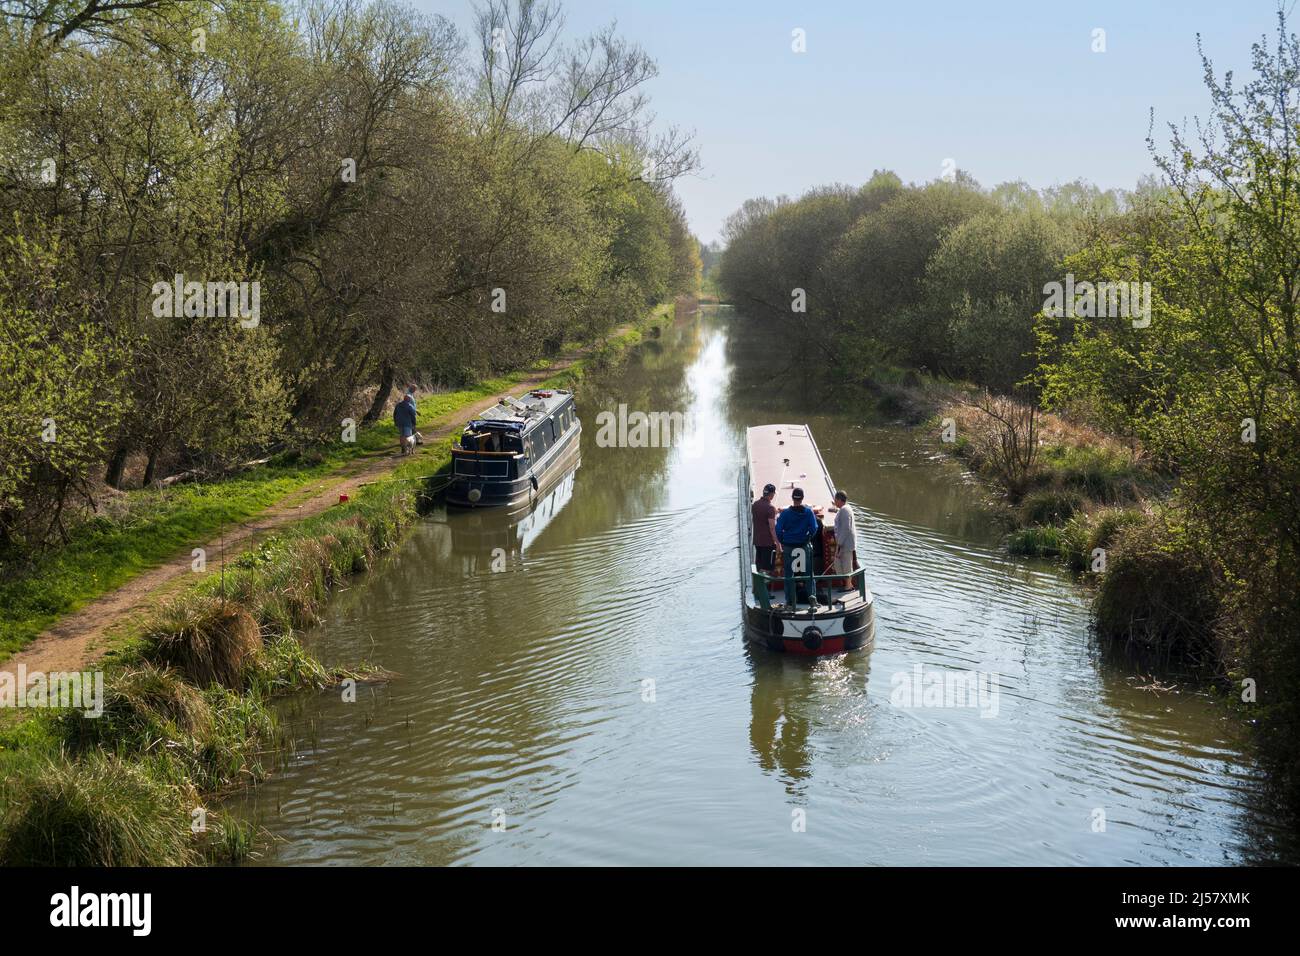 Narrowboat on the Kennet and Avon canal, Marsh Benham, near Newbury, Berkshire, England, United Kingdom, Europe Stock Photo